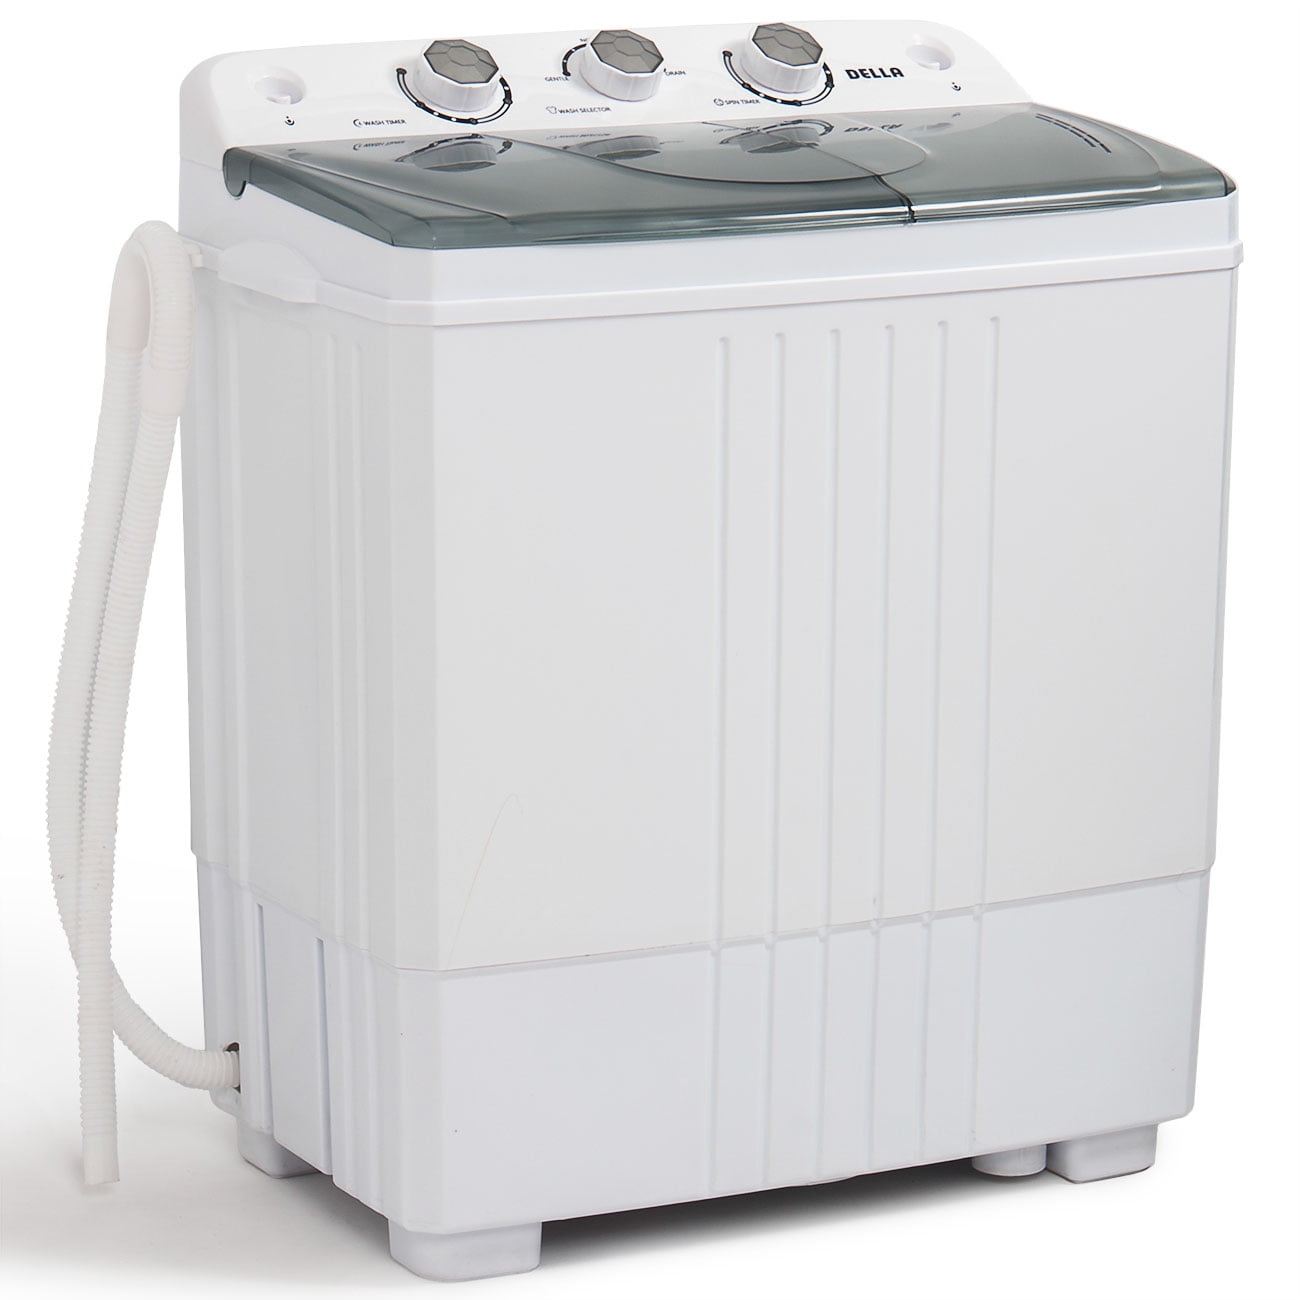 pyle compact & portable washing machine